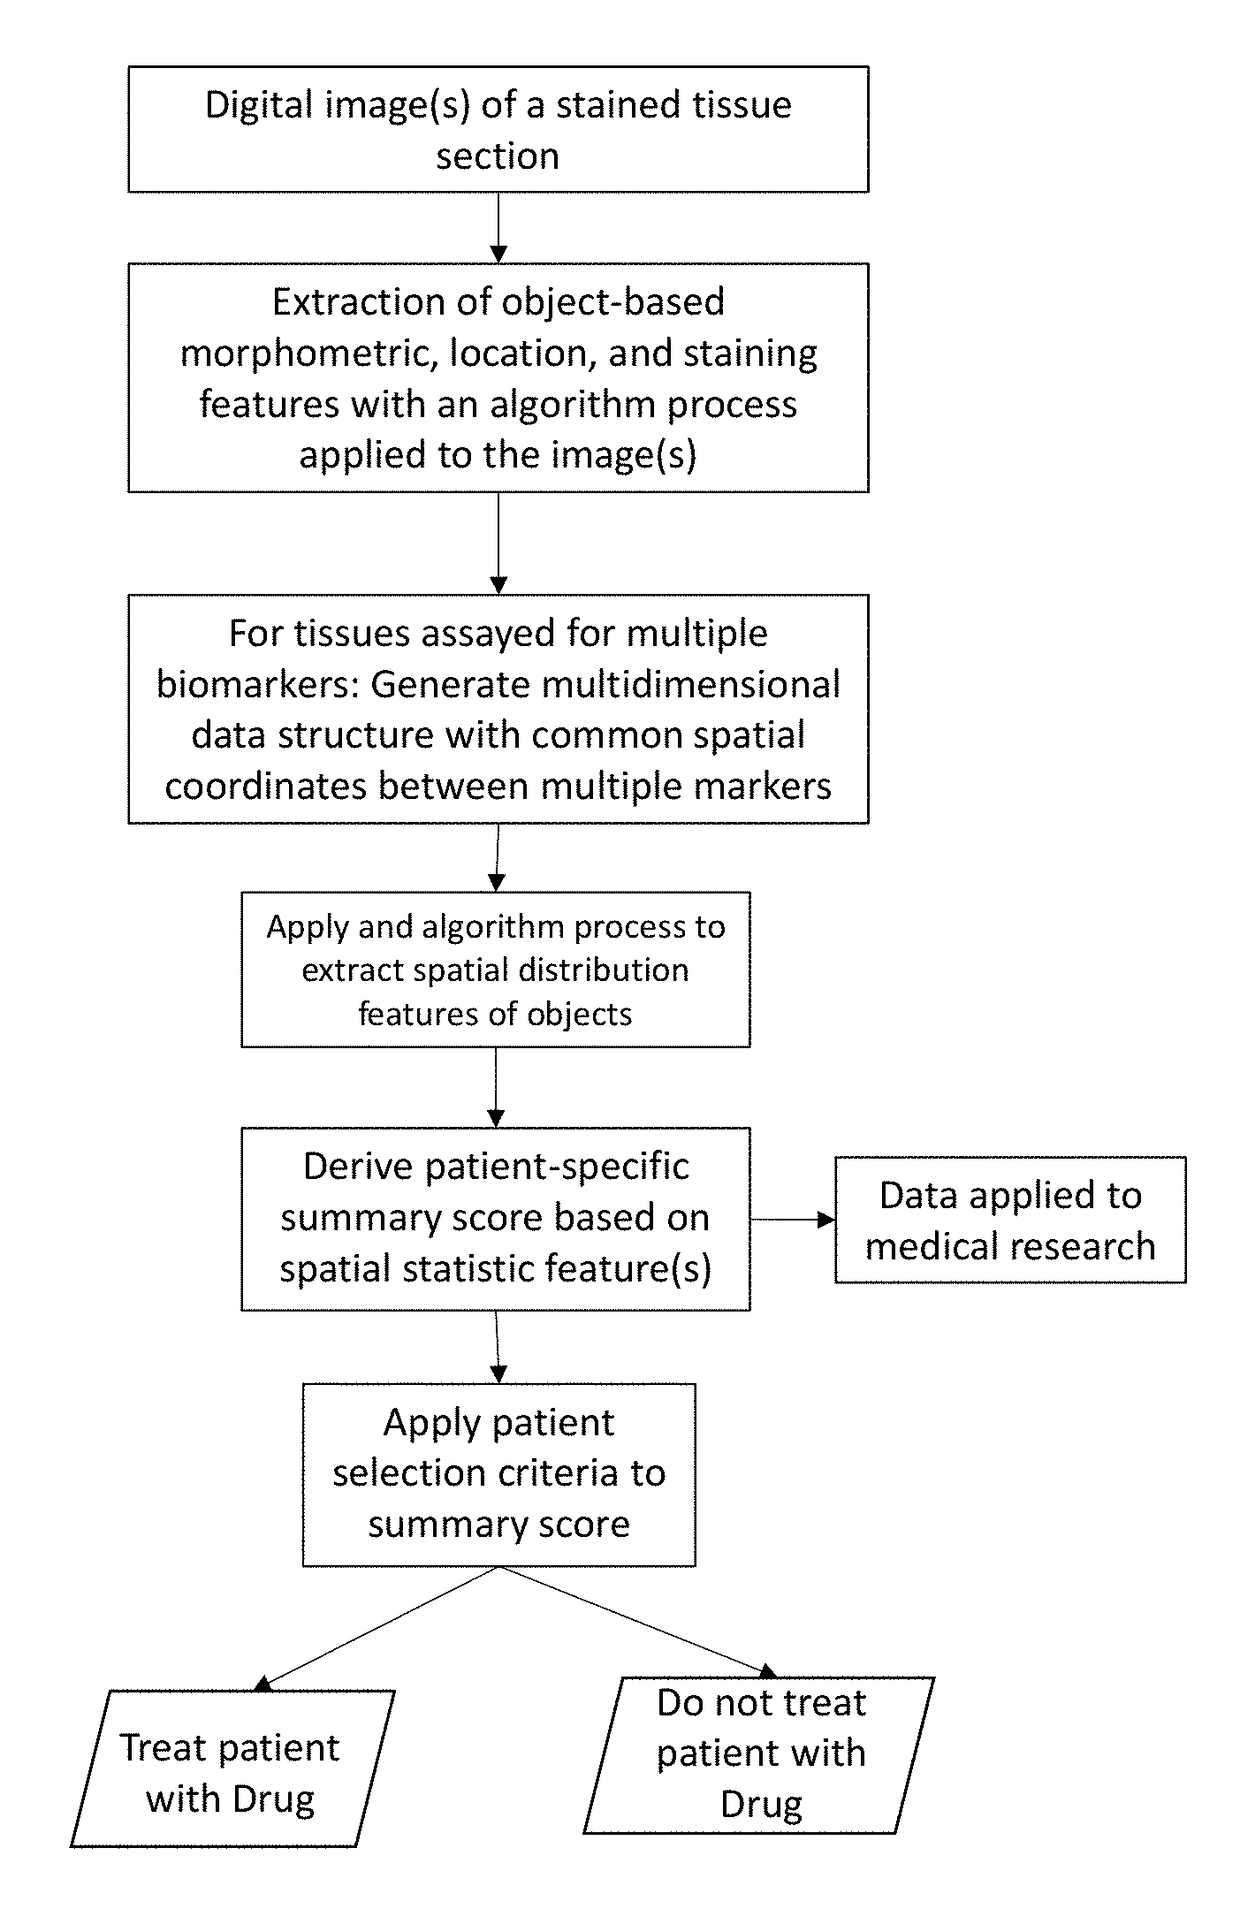 Method for scoring pathology images using spatial analysis of tissues